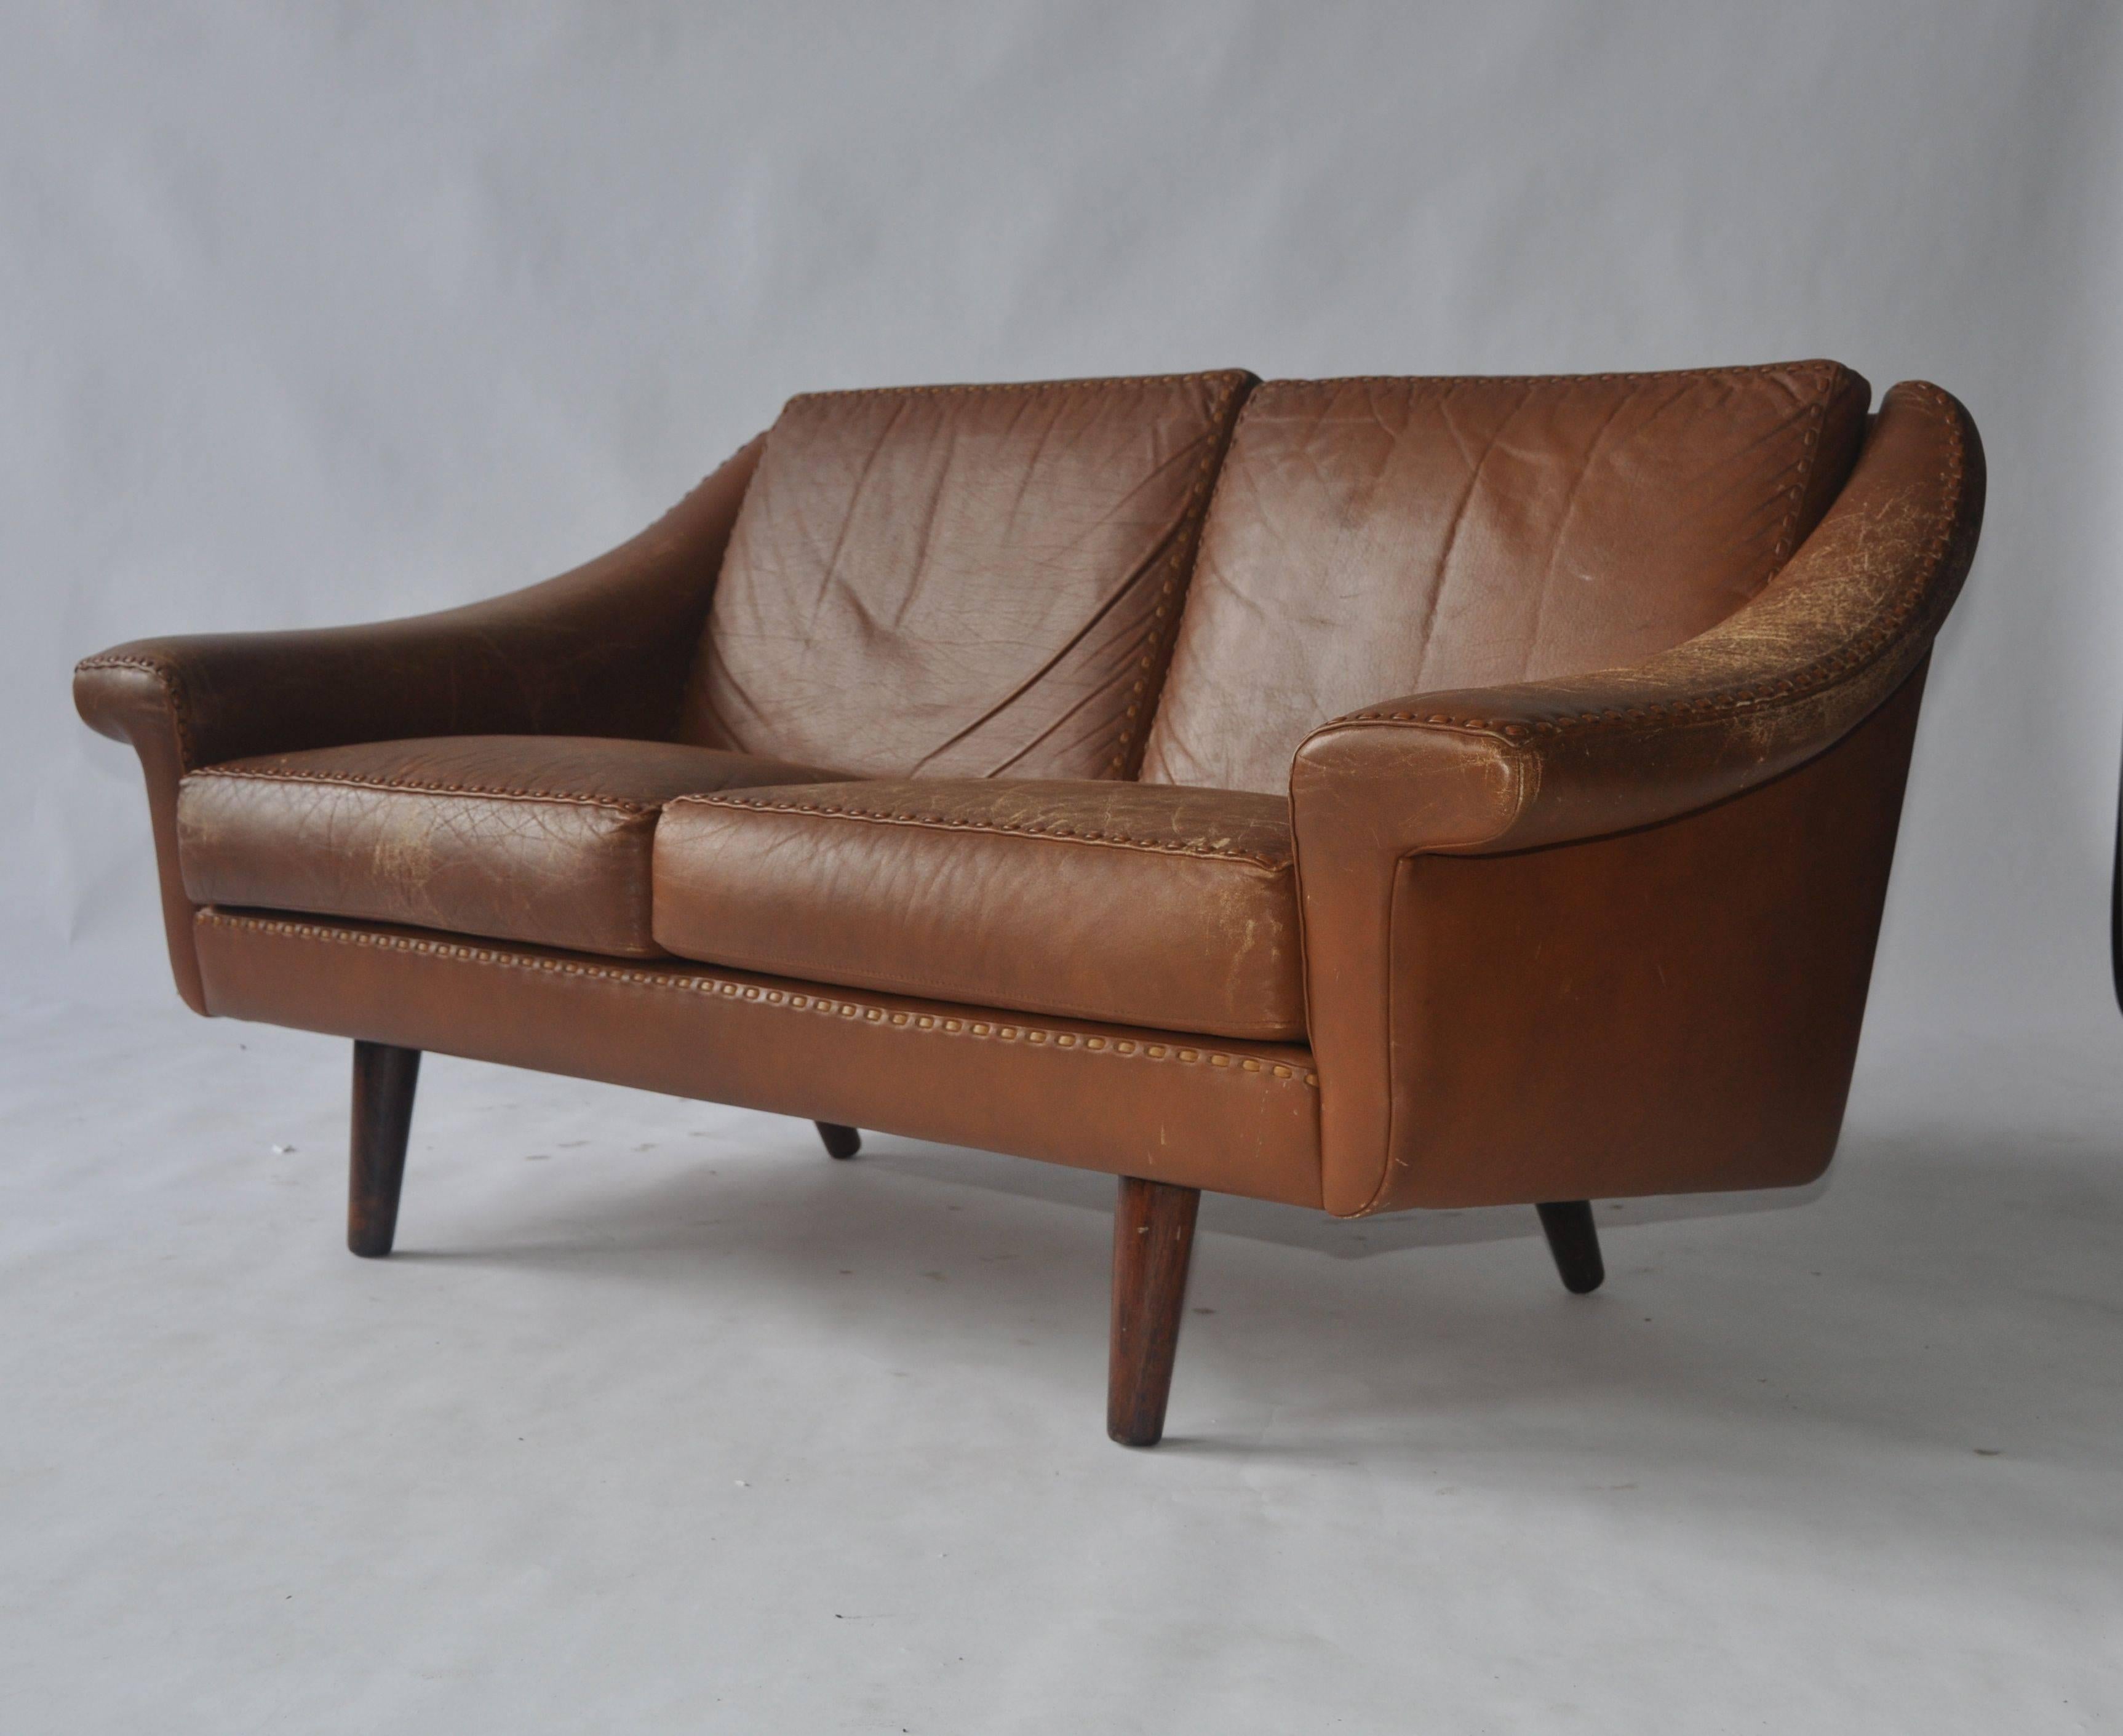 Aage Christiansen Danish leather sofa settee, 1960s.